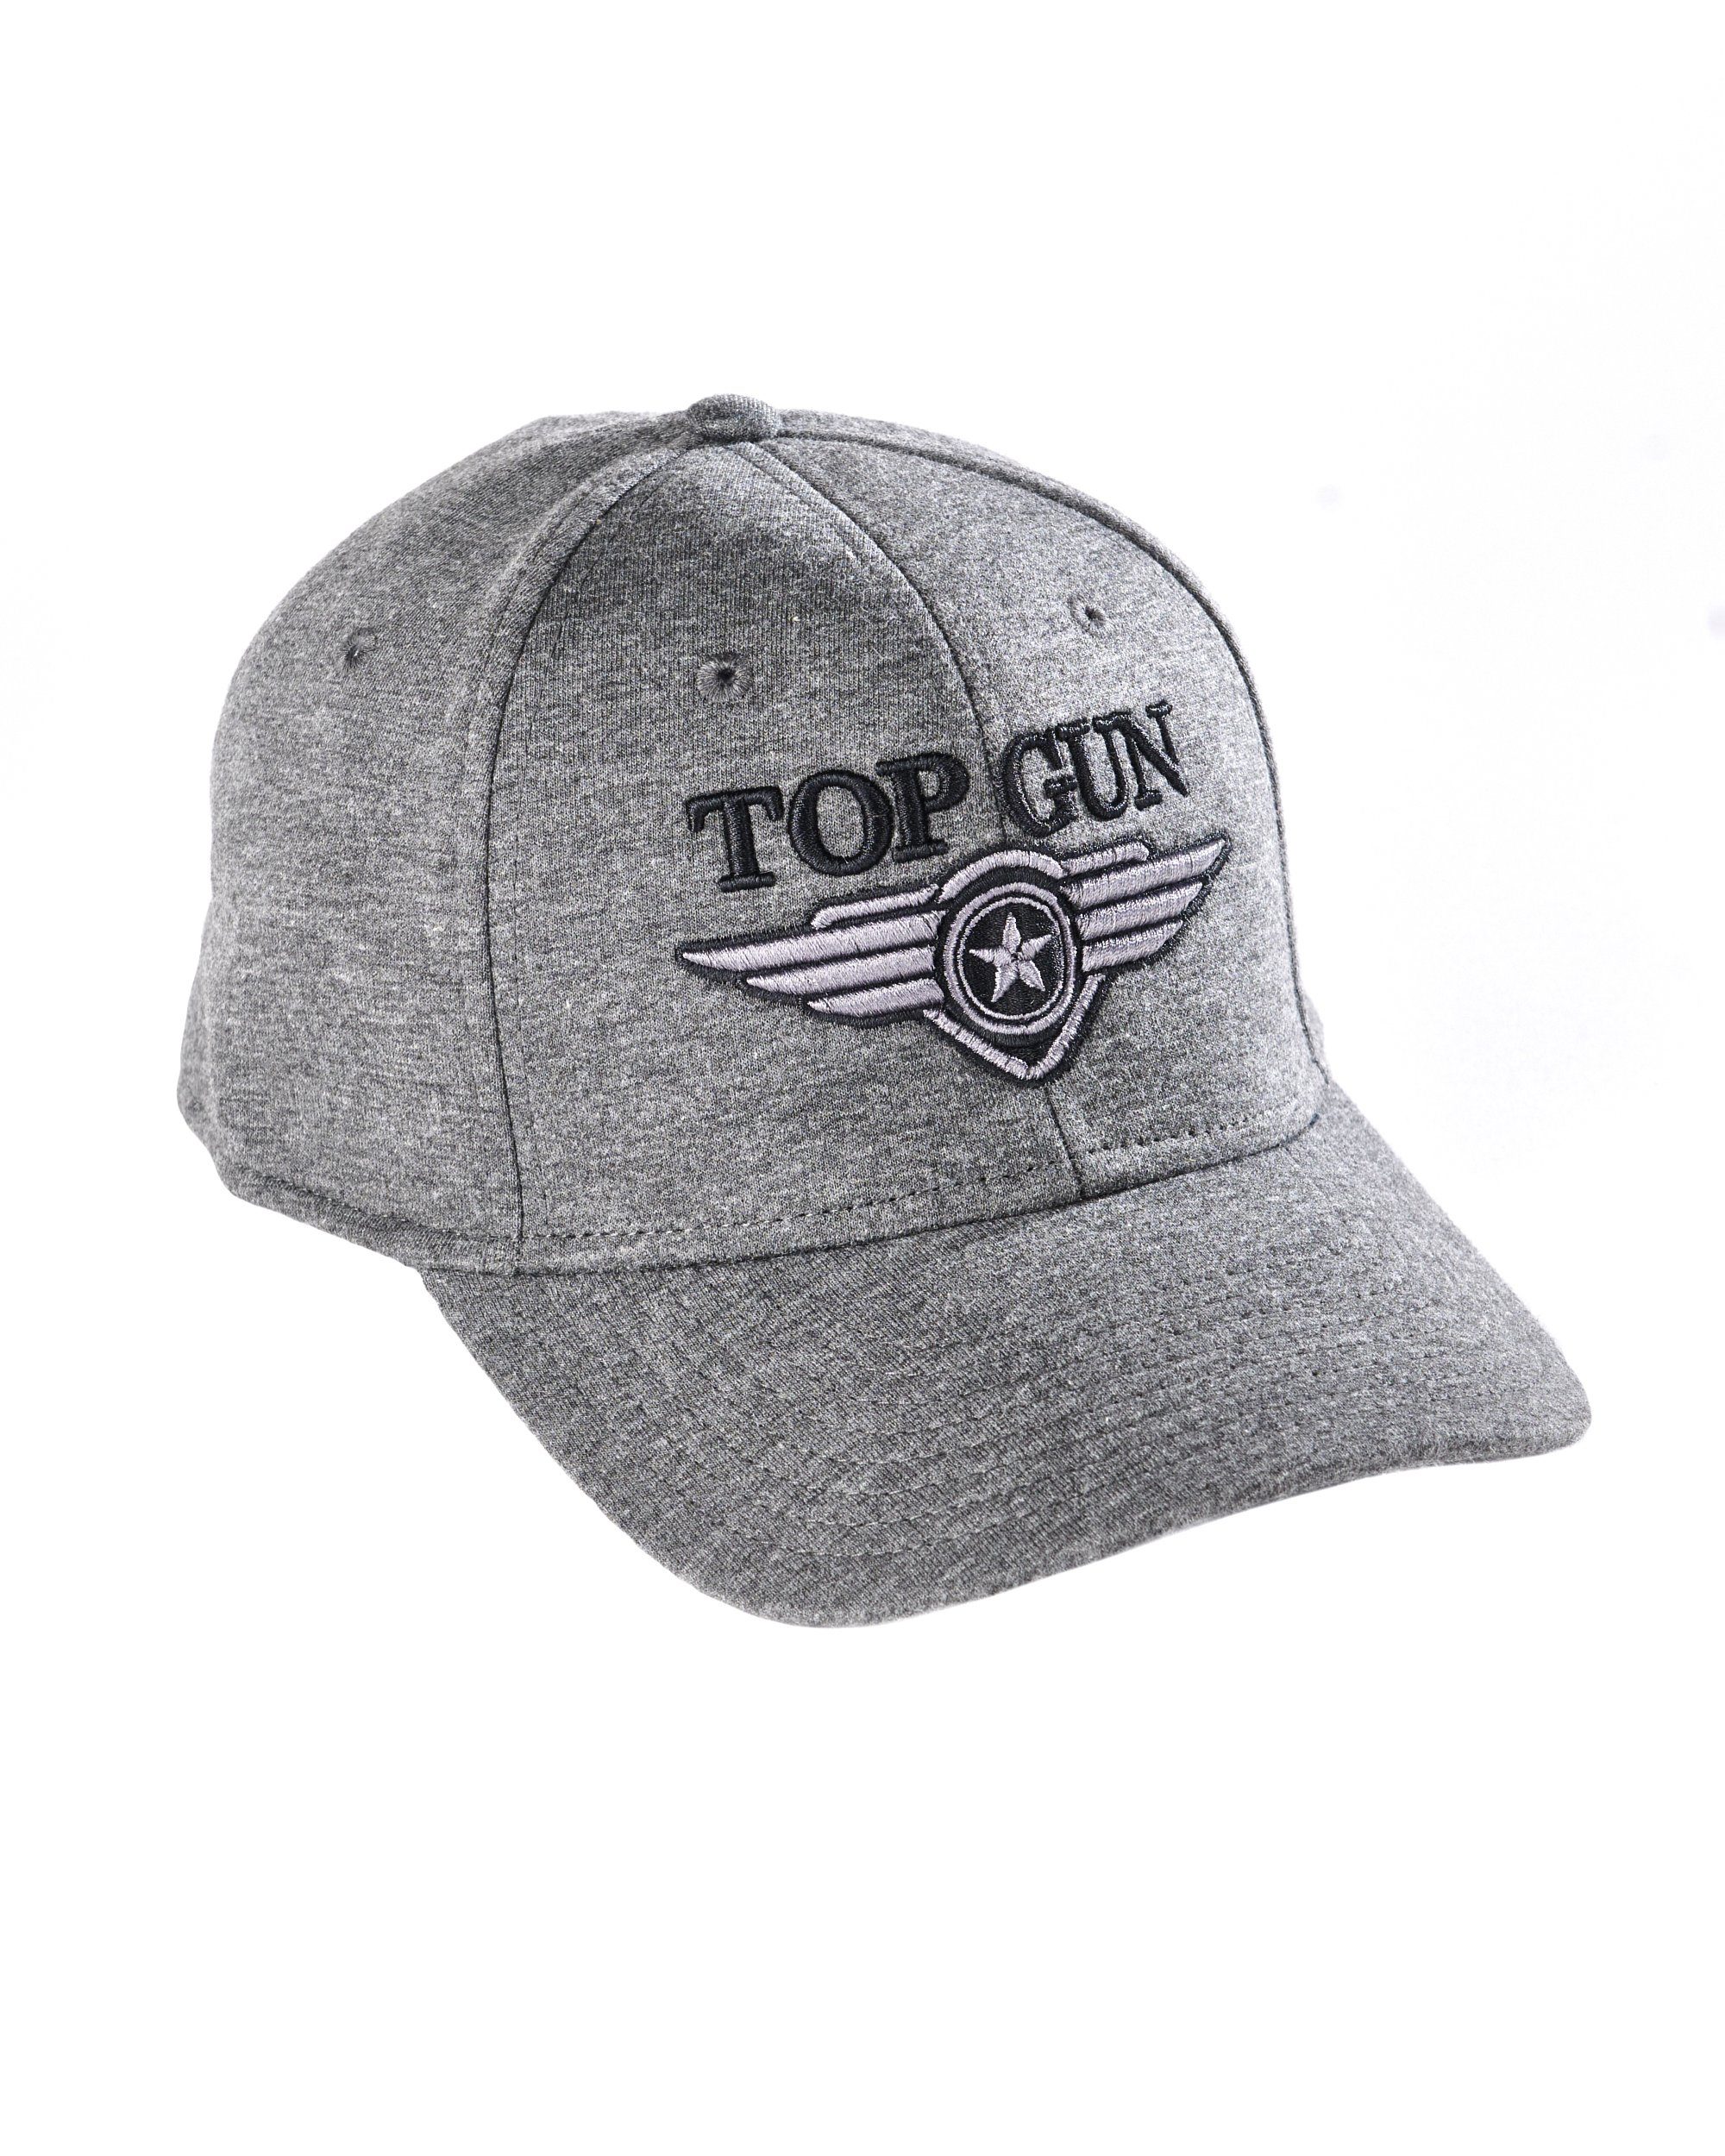 Snapback GUN Snapback black Cap TOP TG20193167